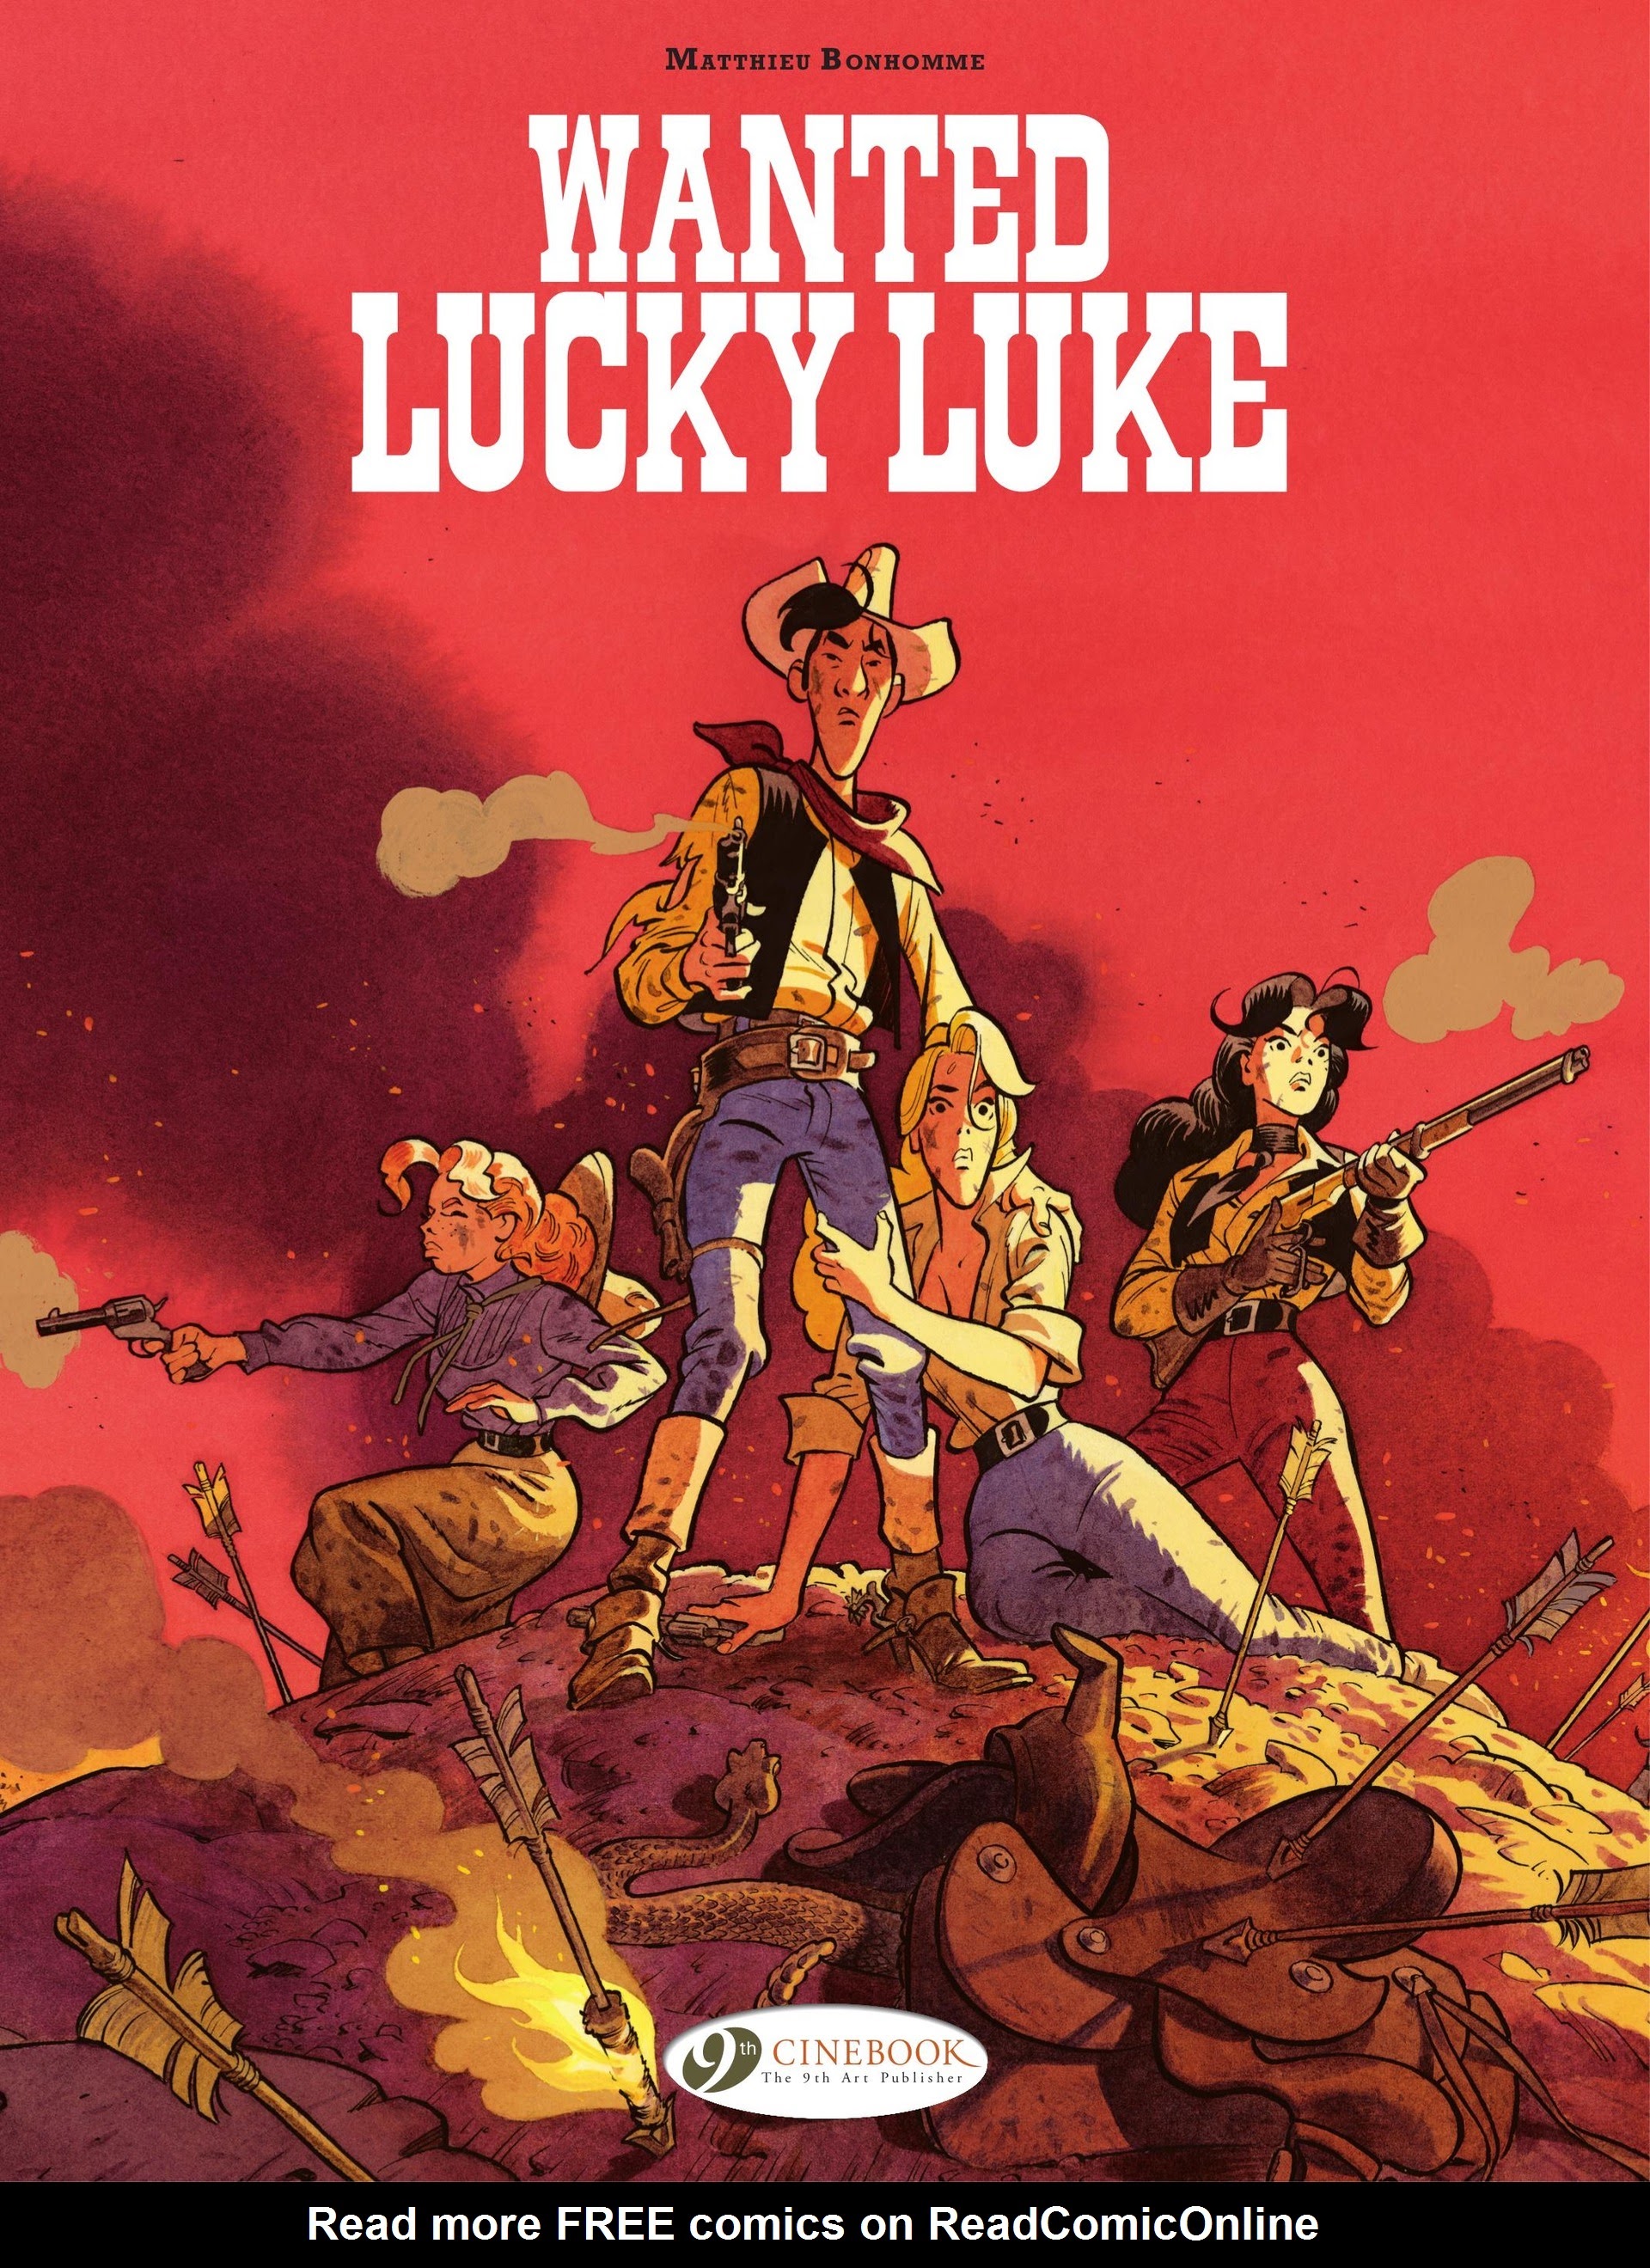 Wanted Lucky Luke Full | Read Wanted Lucky Luke Full comic online in high  quality. Read Full Comic online for free - Read comics online in high  quality .| READ COMIC ONLINE